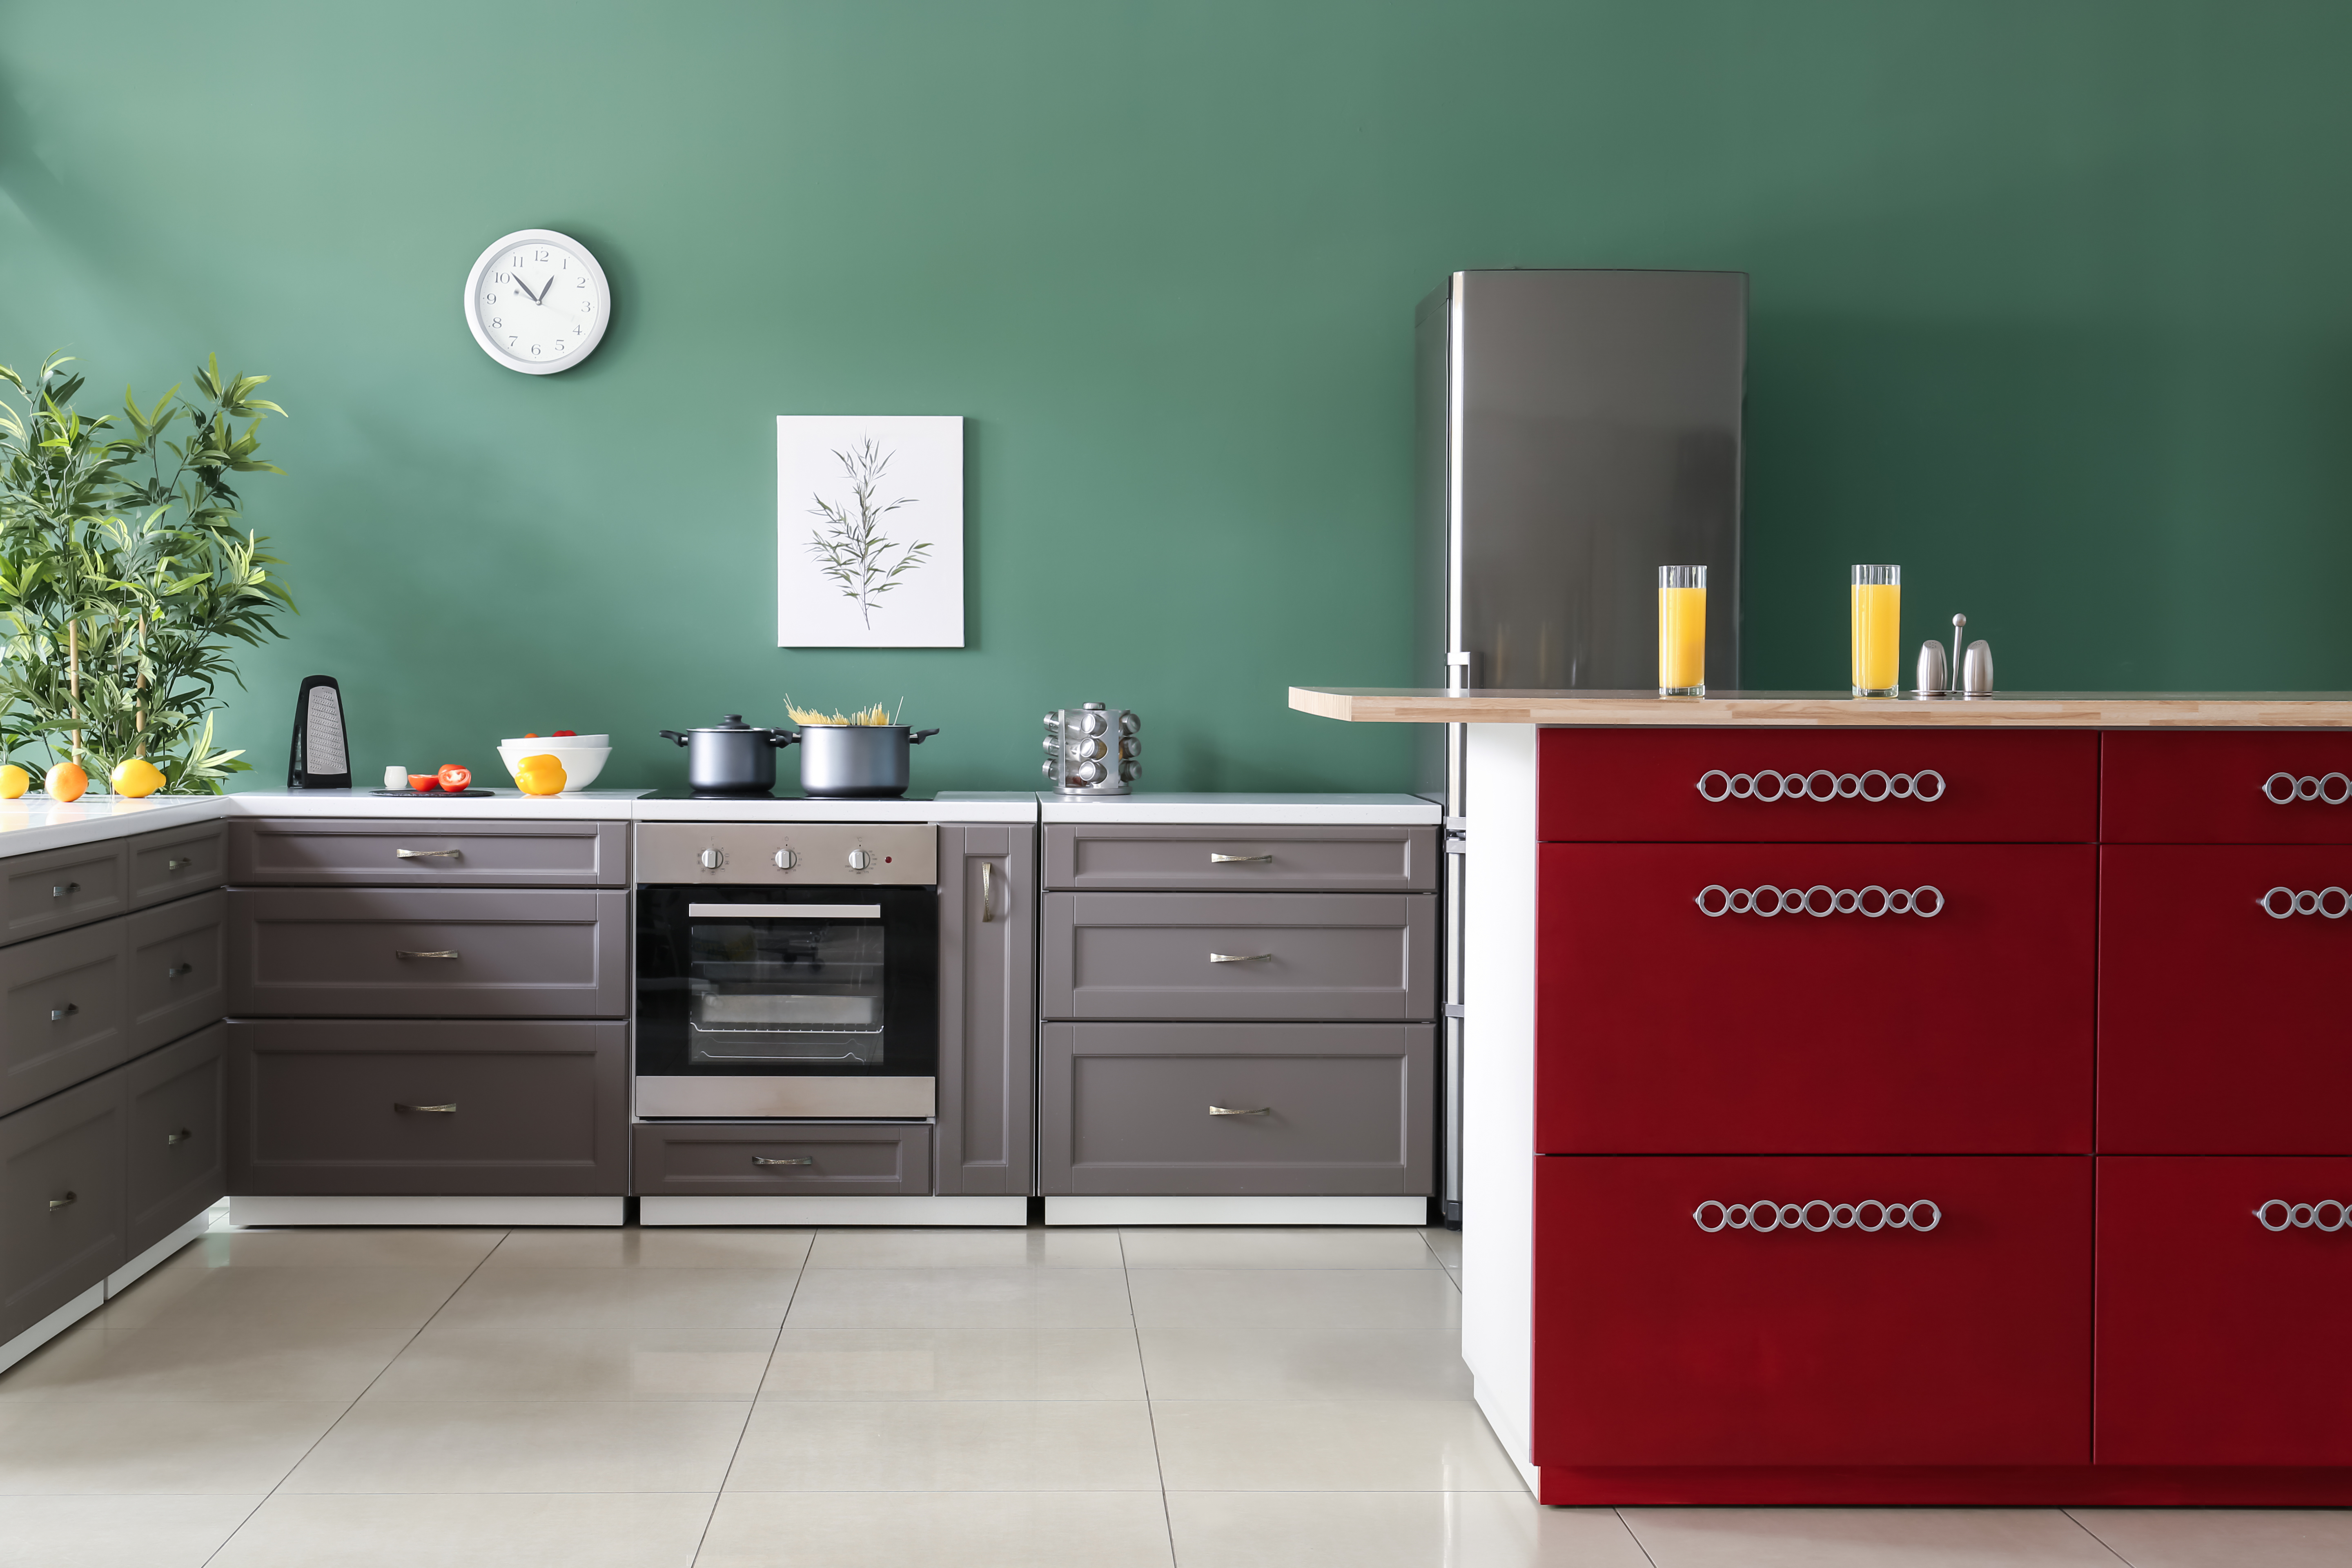 20 Coolest Colour Combinations for Your Kitchen   HomeLane Blog